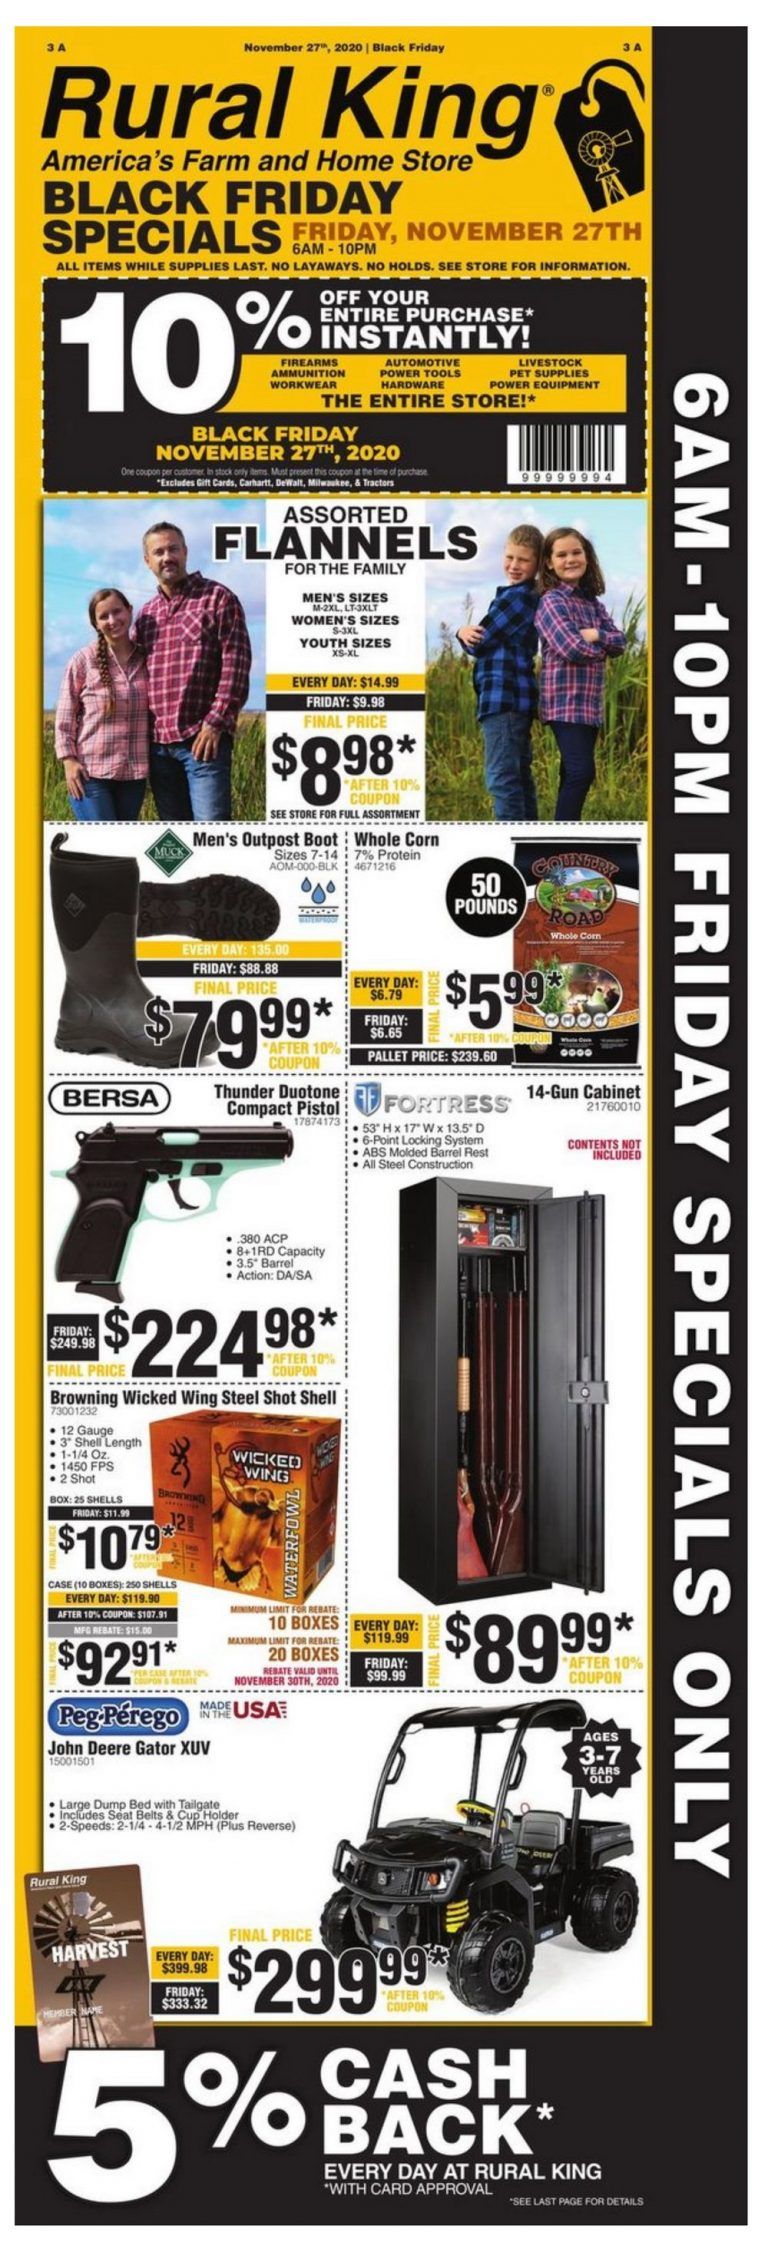 Rural King Black Friday Ad, Nov 26 Nov 27, 2020